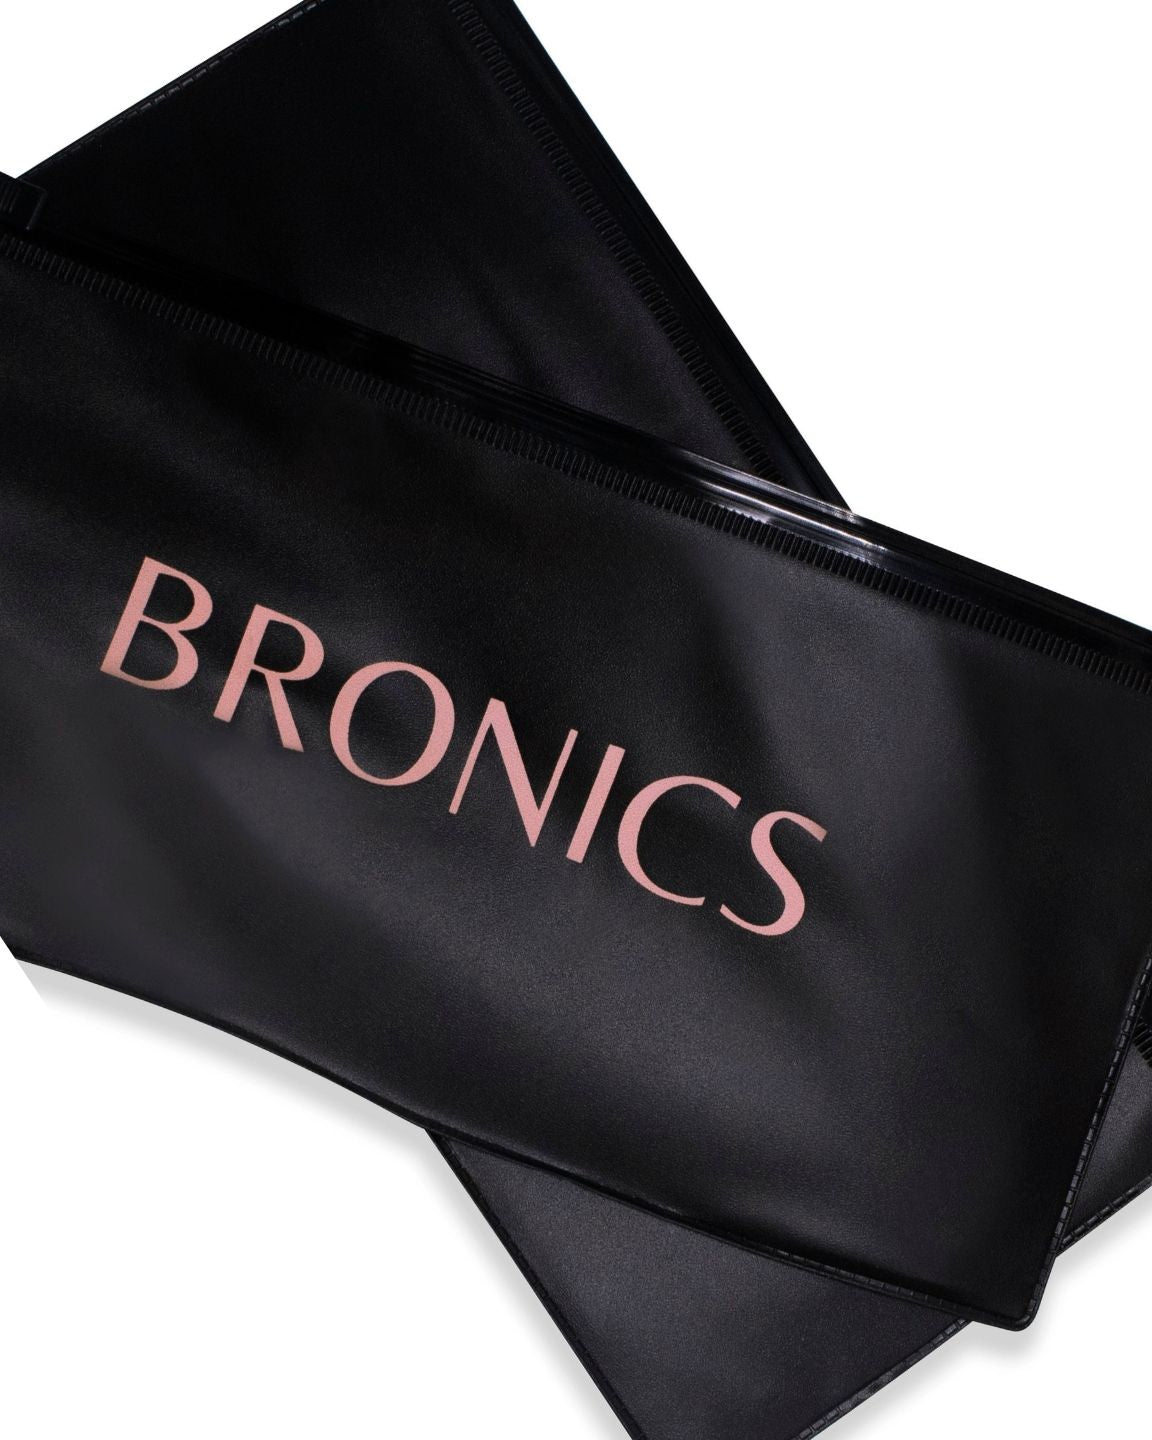 bronics cosmetic bag, black best cosmetic bag Australia